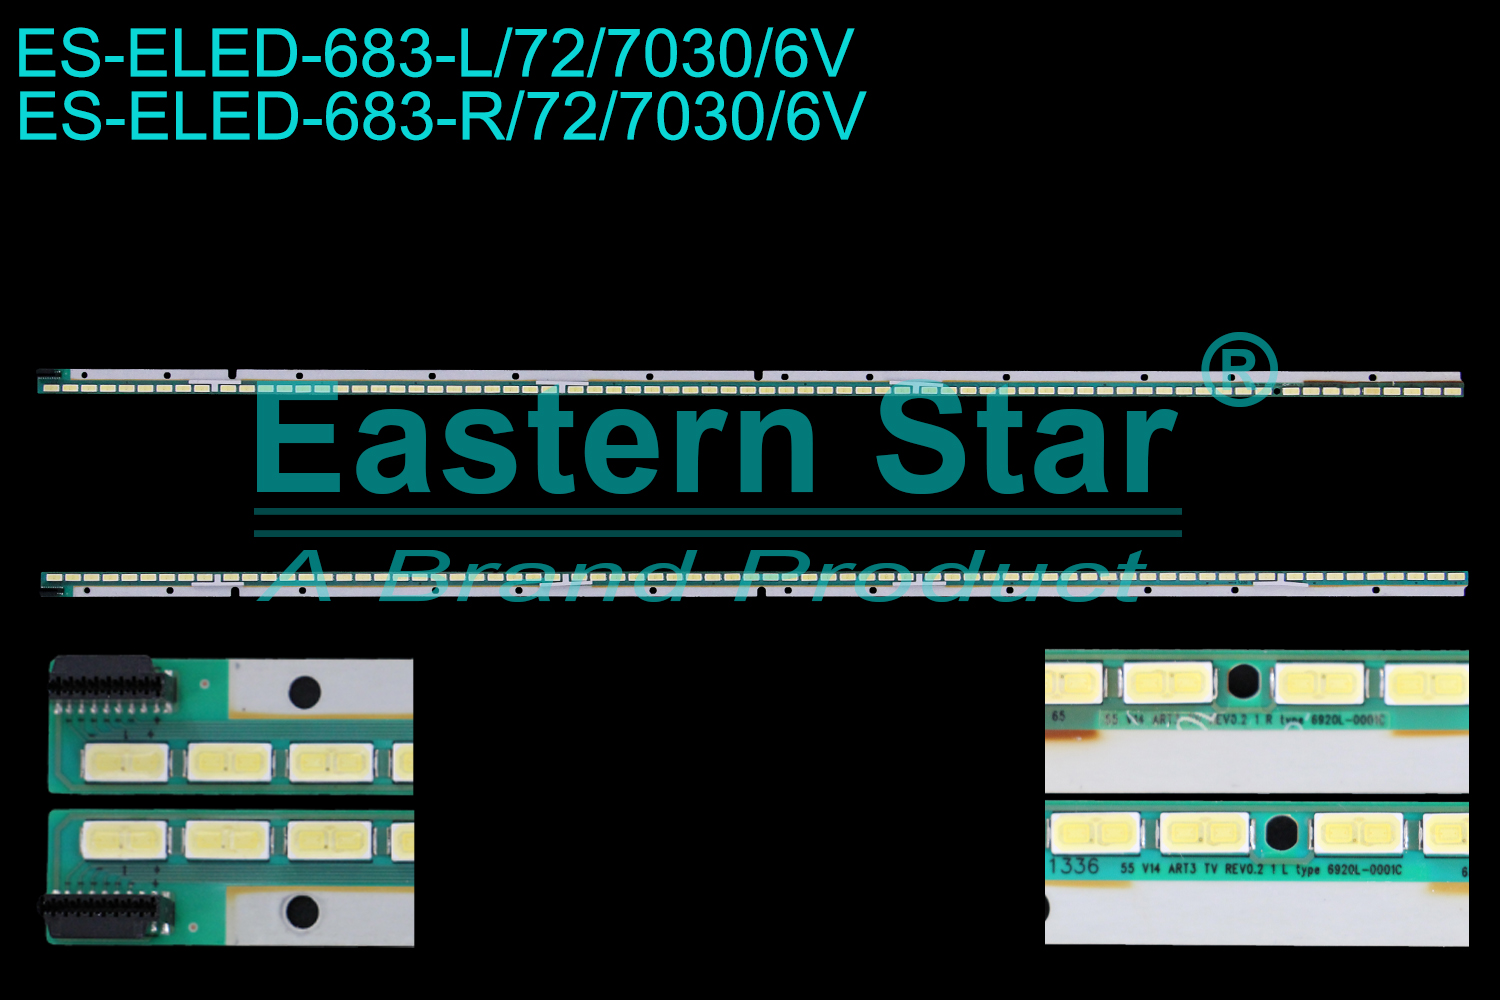 ES-ELED-683 ELED/EDGE TV backlight use for Lg/Skyworth 55'' LED55X9500UF L: NFT-ME9 94V-0 1336   55 V14  ART3 TV REV0.2 1 L/R type  6920L-0001C 6922L-0087A  6916L-1745A 6916L-1746A   6920L-0001C LED STRIPS(2)